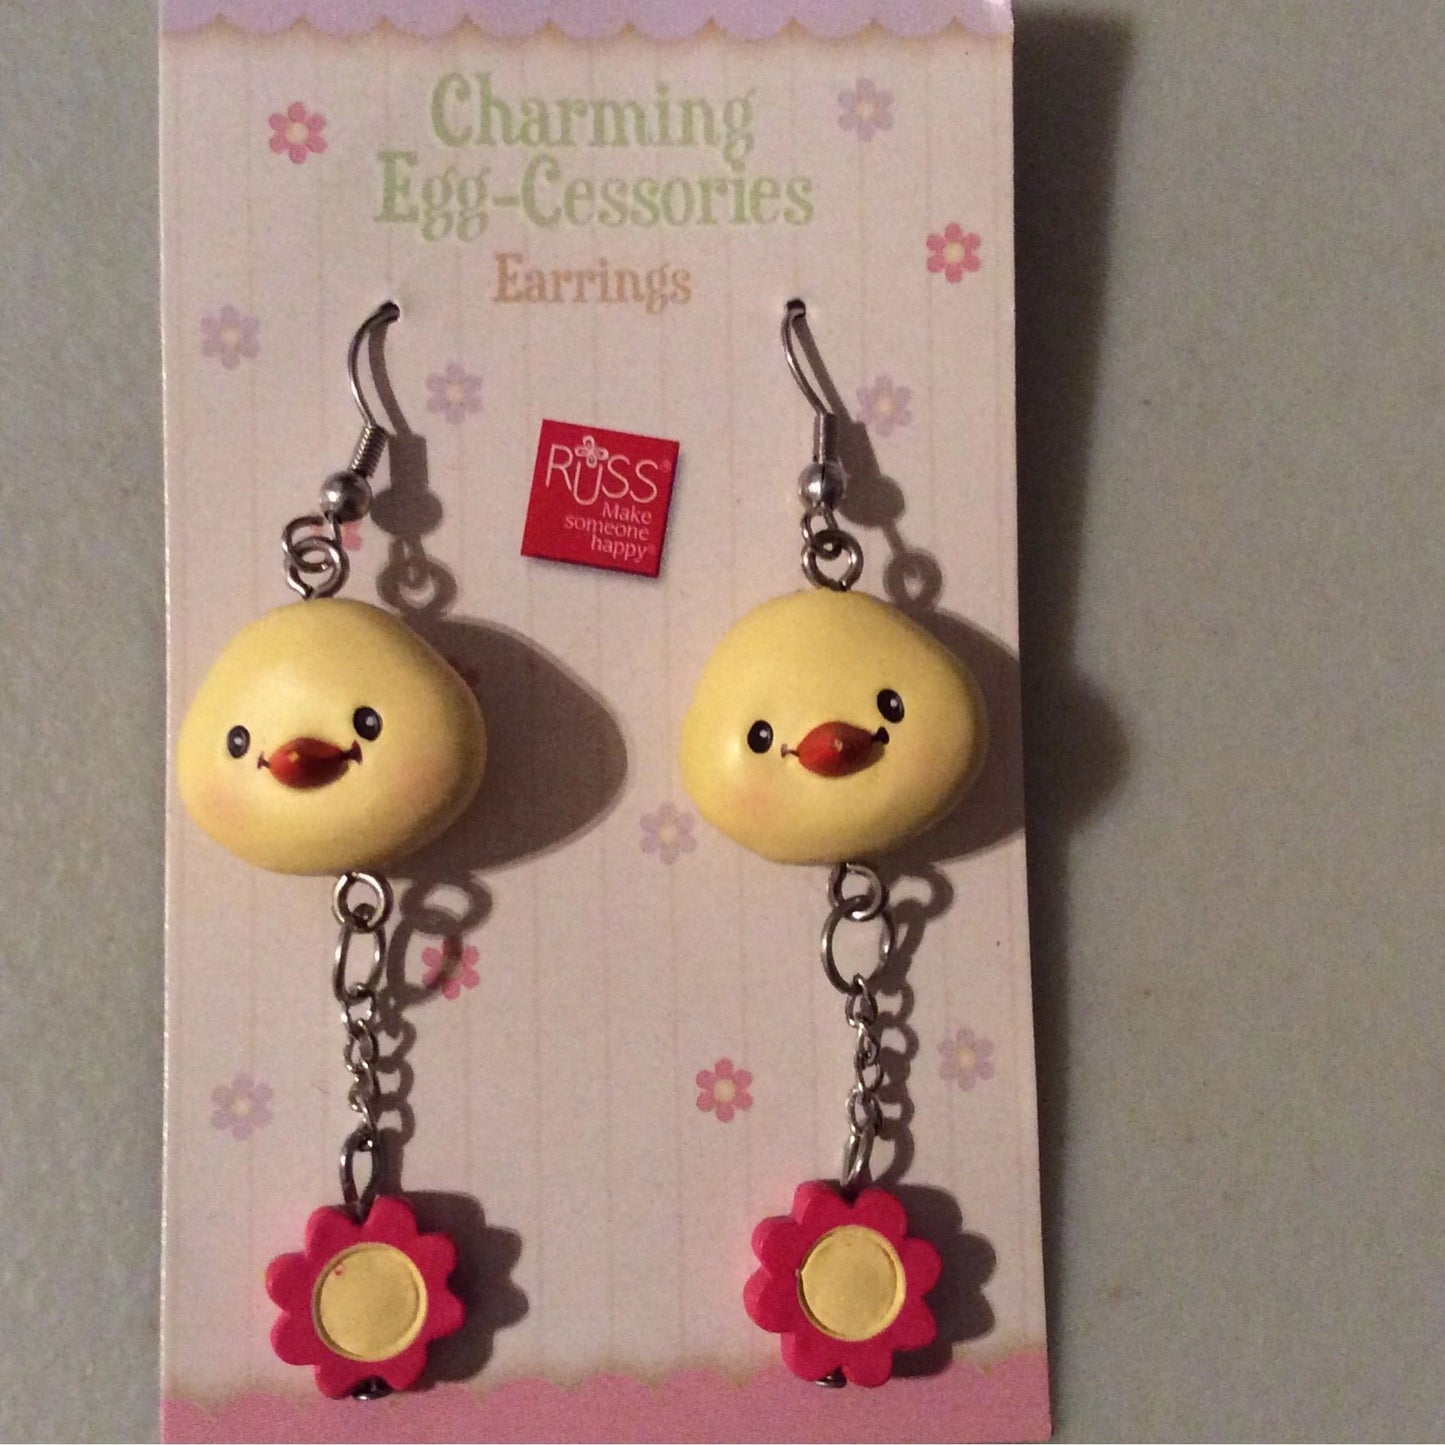 Charming Egg-Cessories Earrings